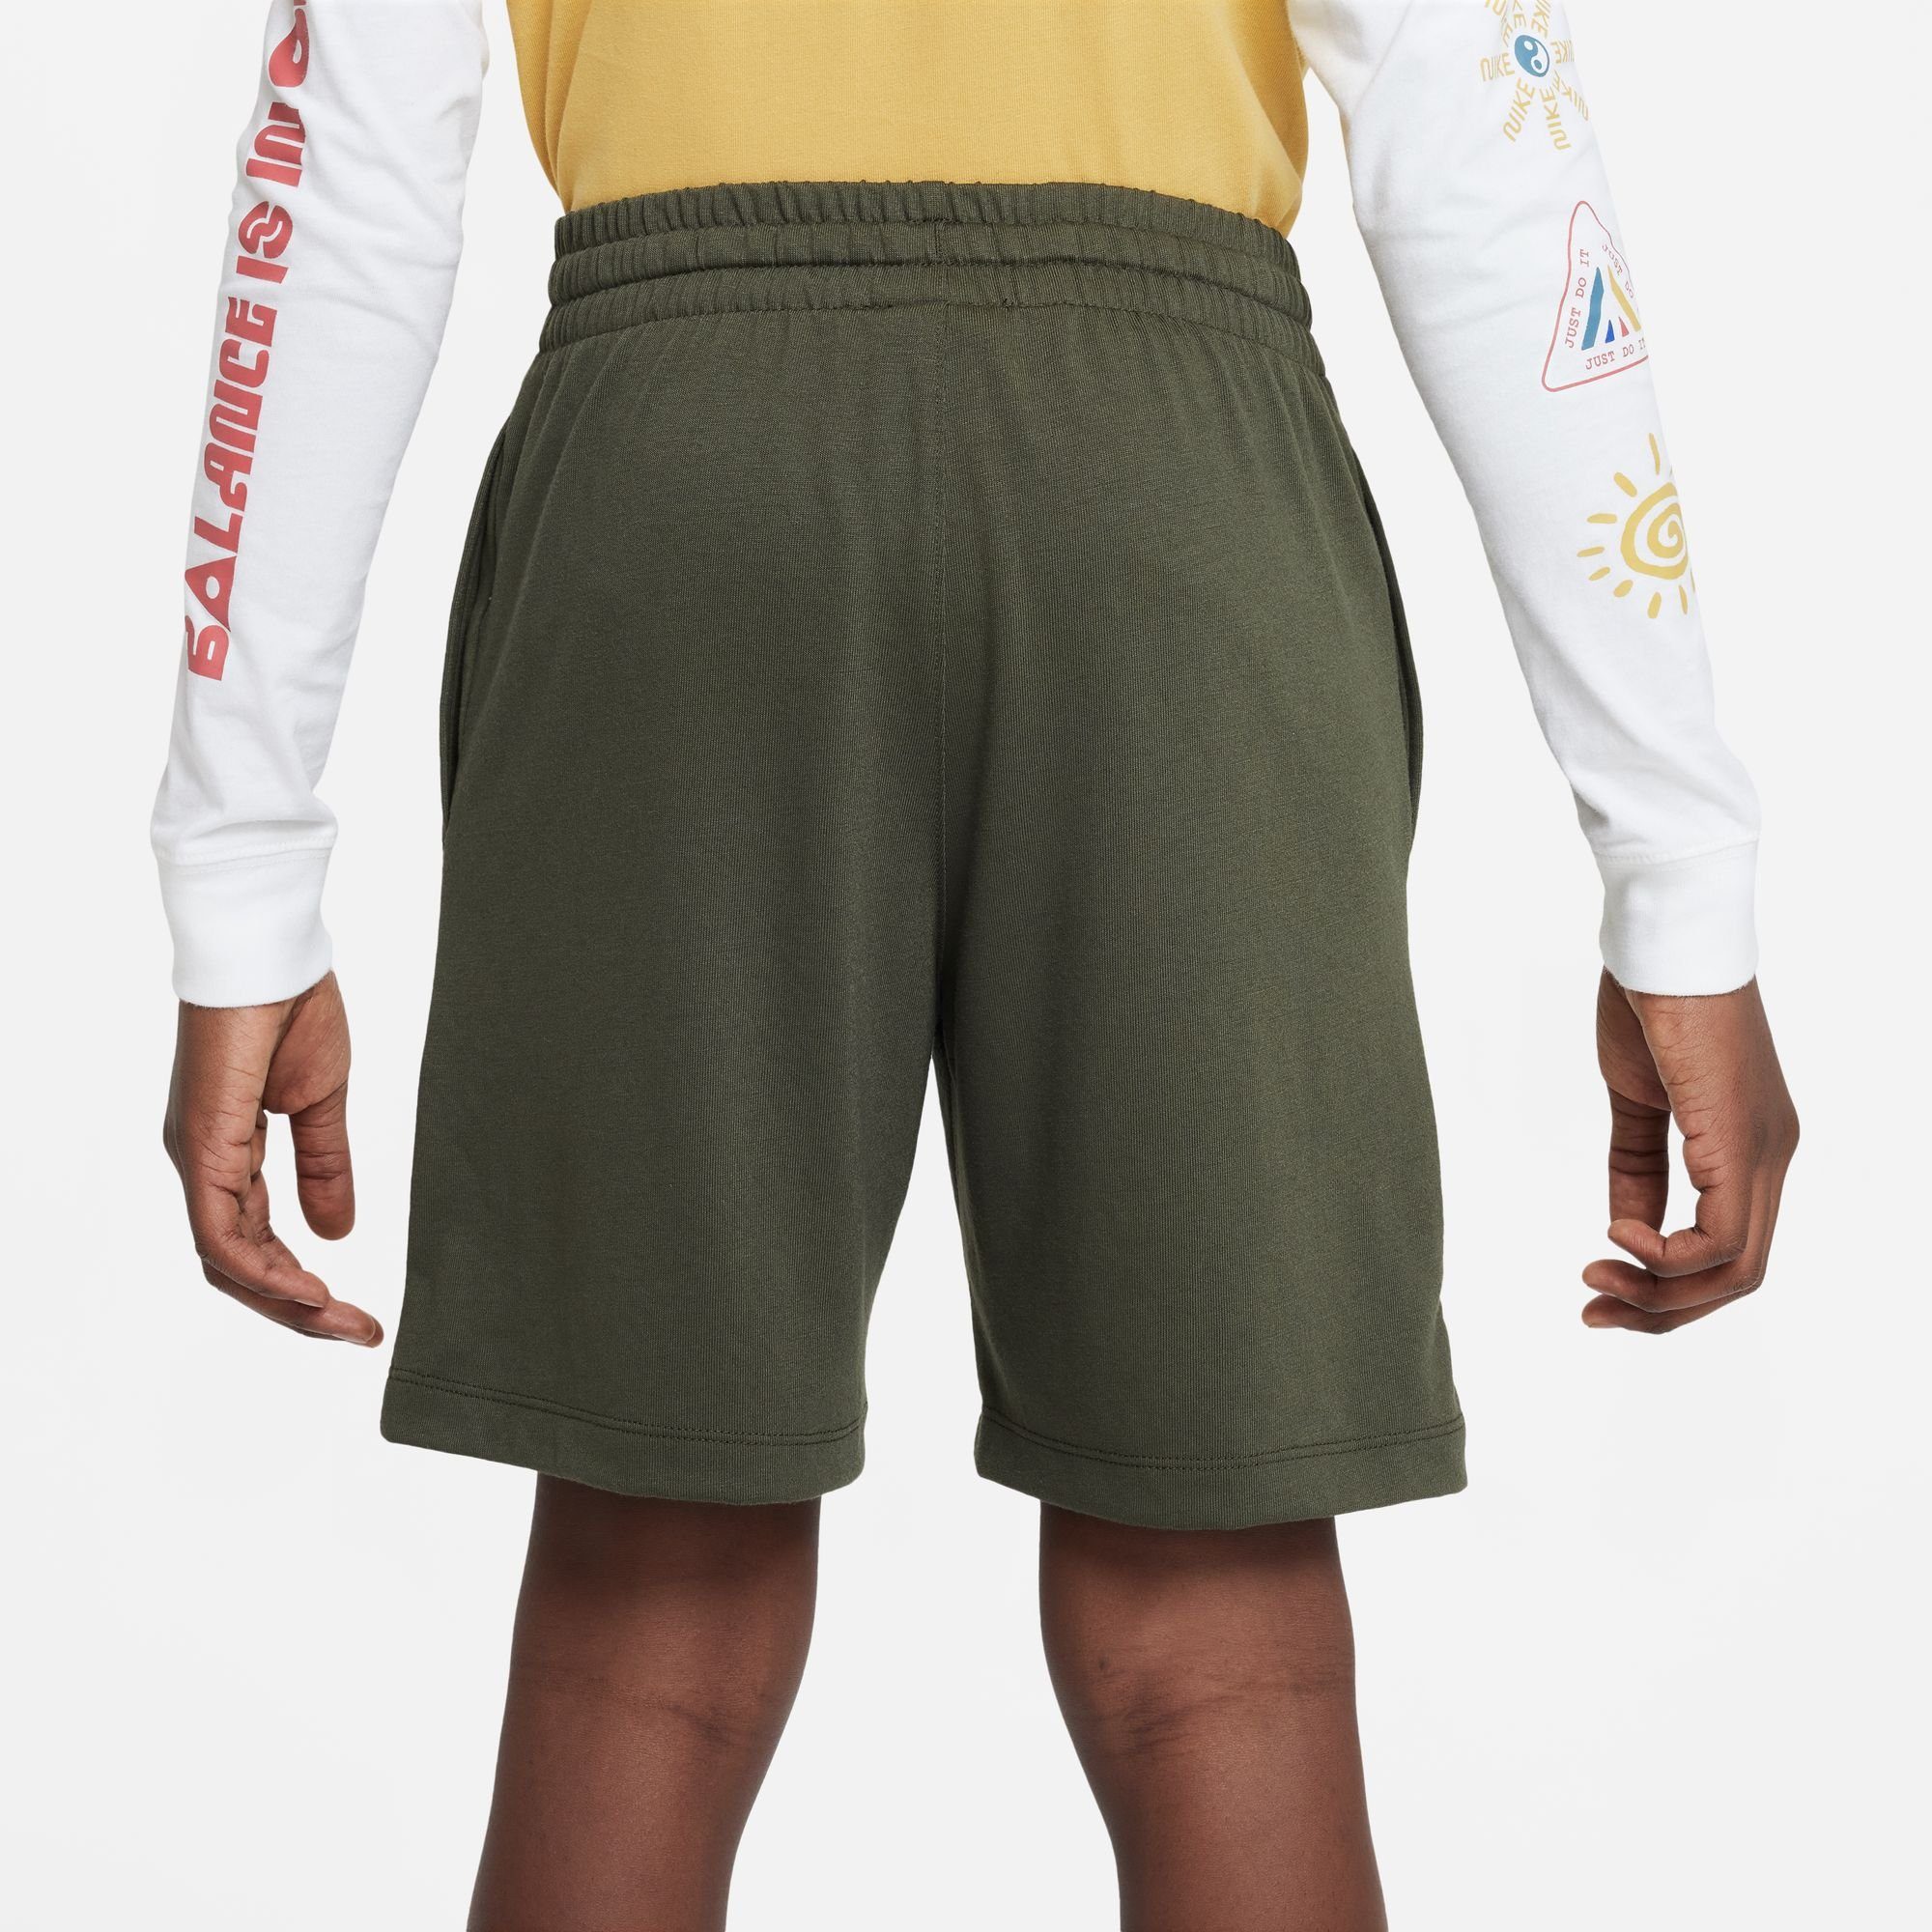 CARGO KIDS' BIG Sportswear (BOYS) Shorts Nike SHORTS KHAKI/WHITE JERSEY